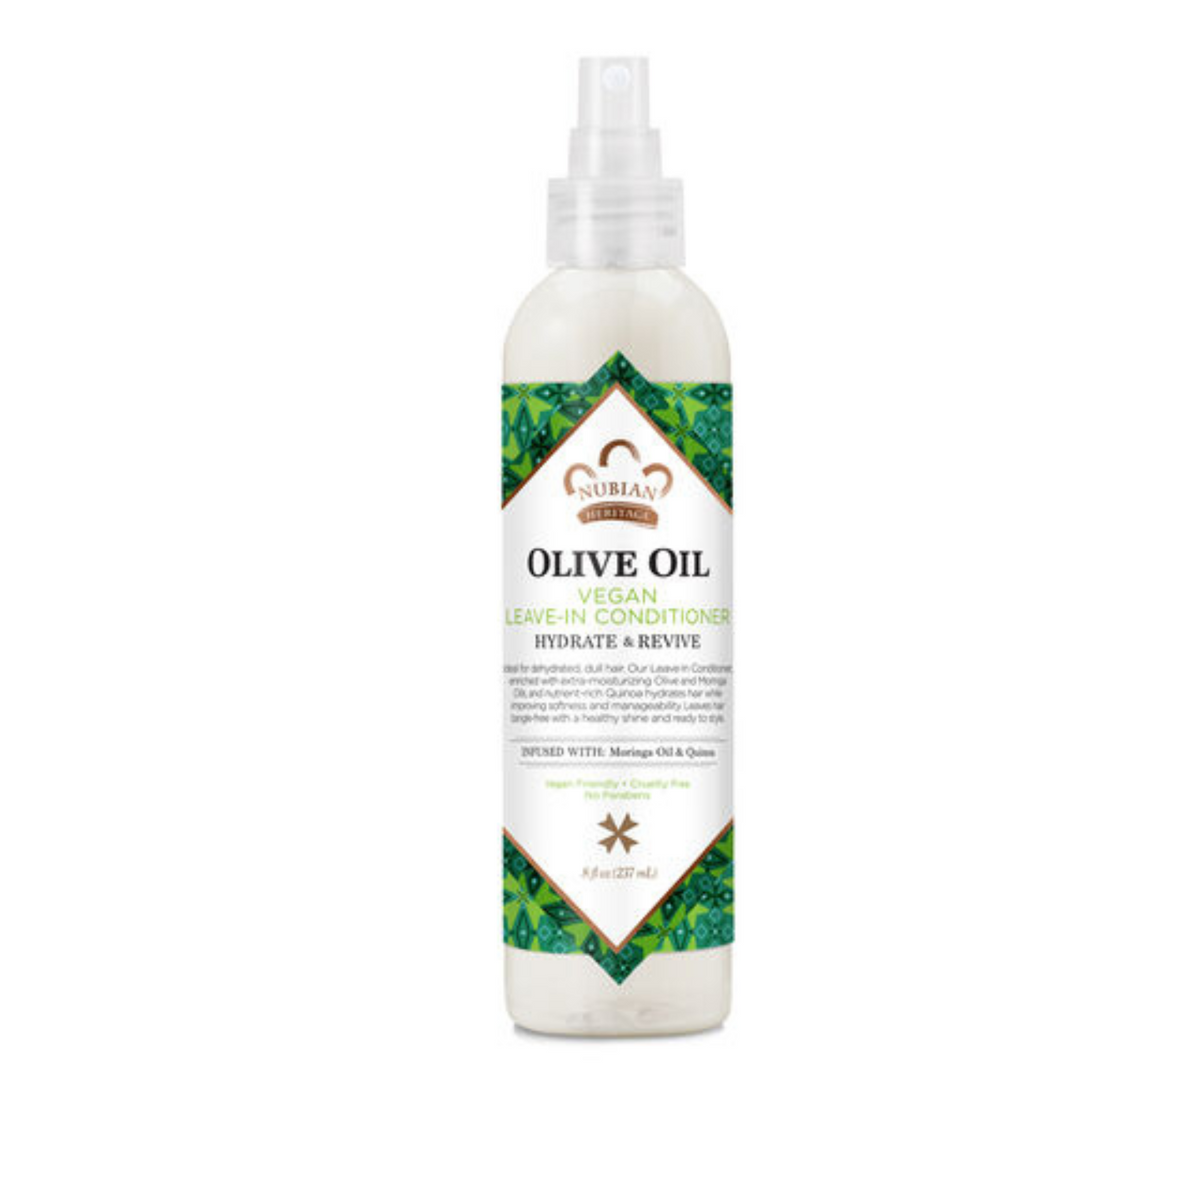 Primary Image of Nubian Heritage Olive Oil Vegan Leave-In Conditioner (8 fl oz)